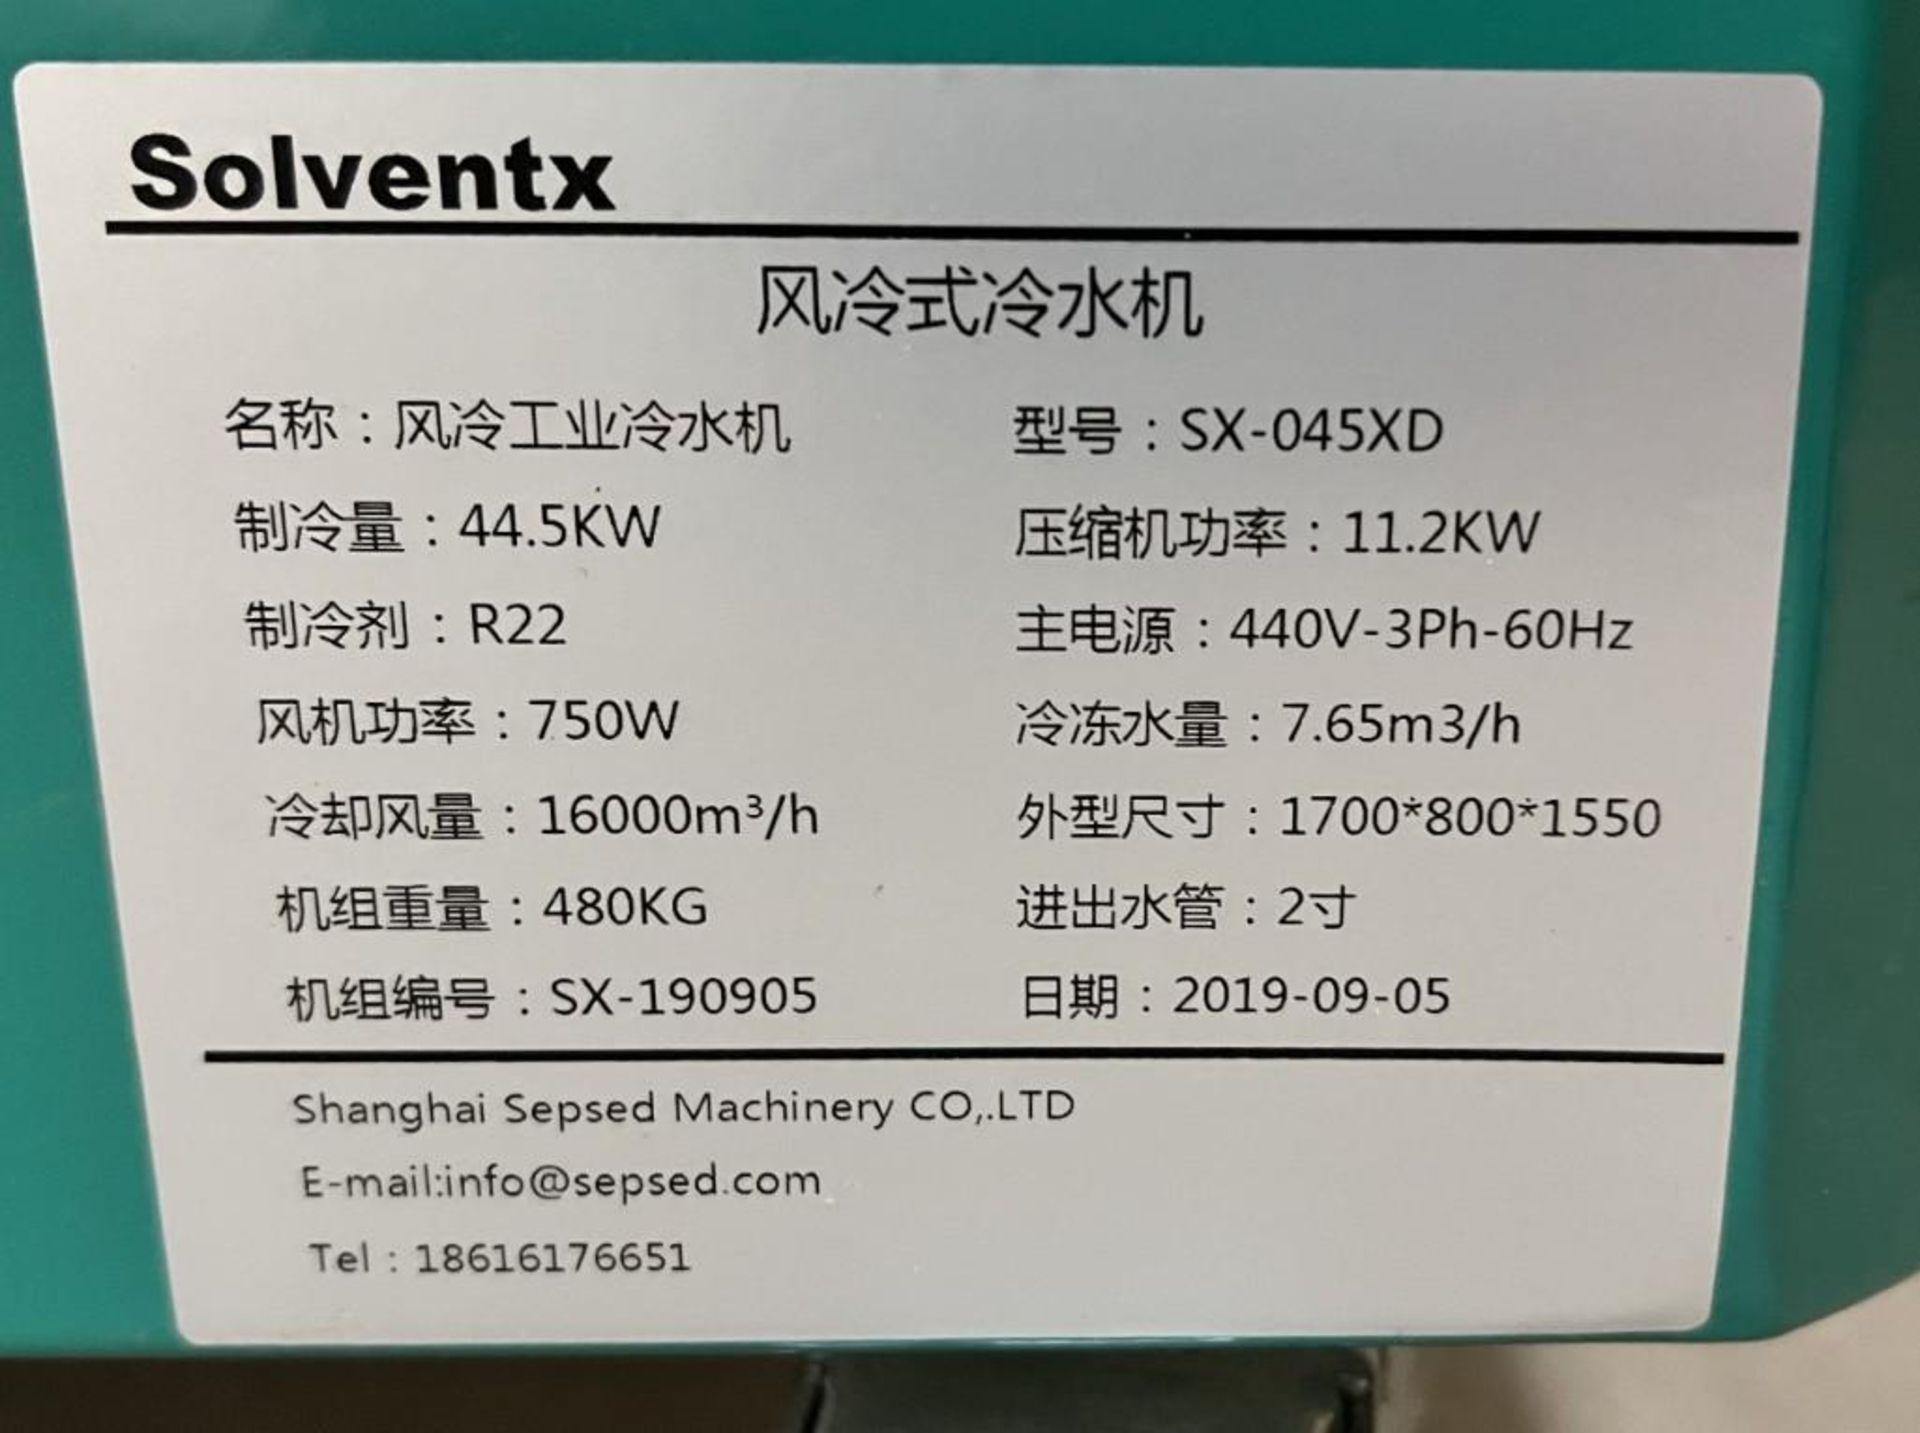 Shanghai Sepsed Machinery Solvent X Chiller, Model SX-045XD, Serial# sx-190905, Built 05-2019. ***SE - Image 9 of 9